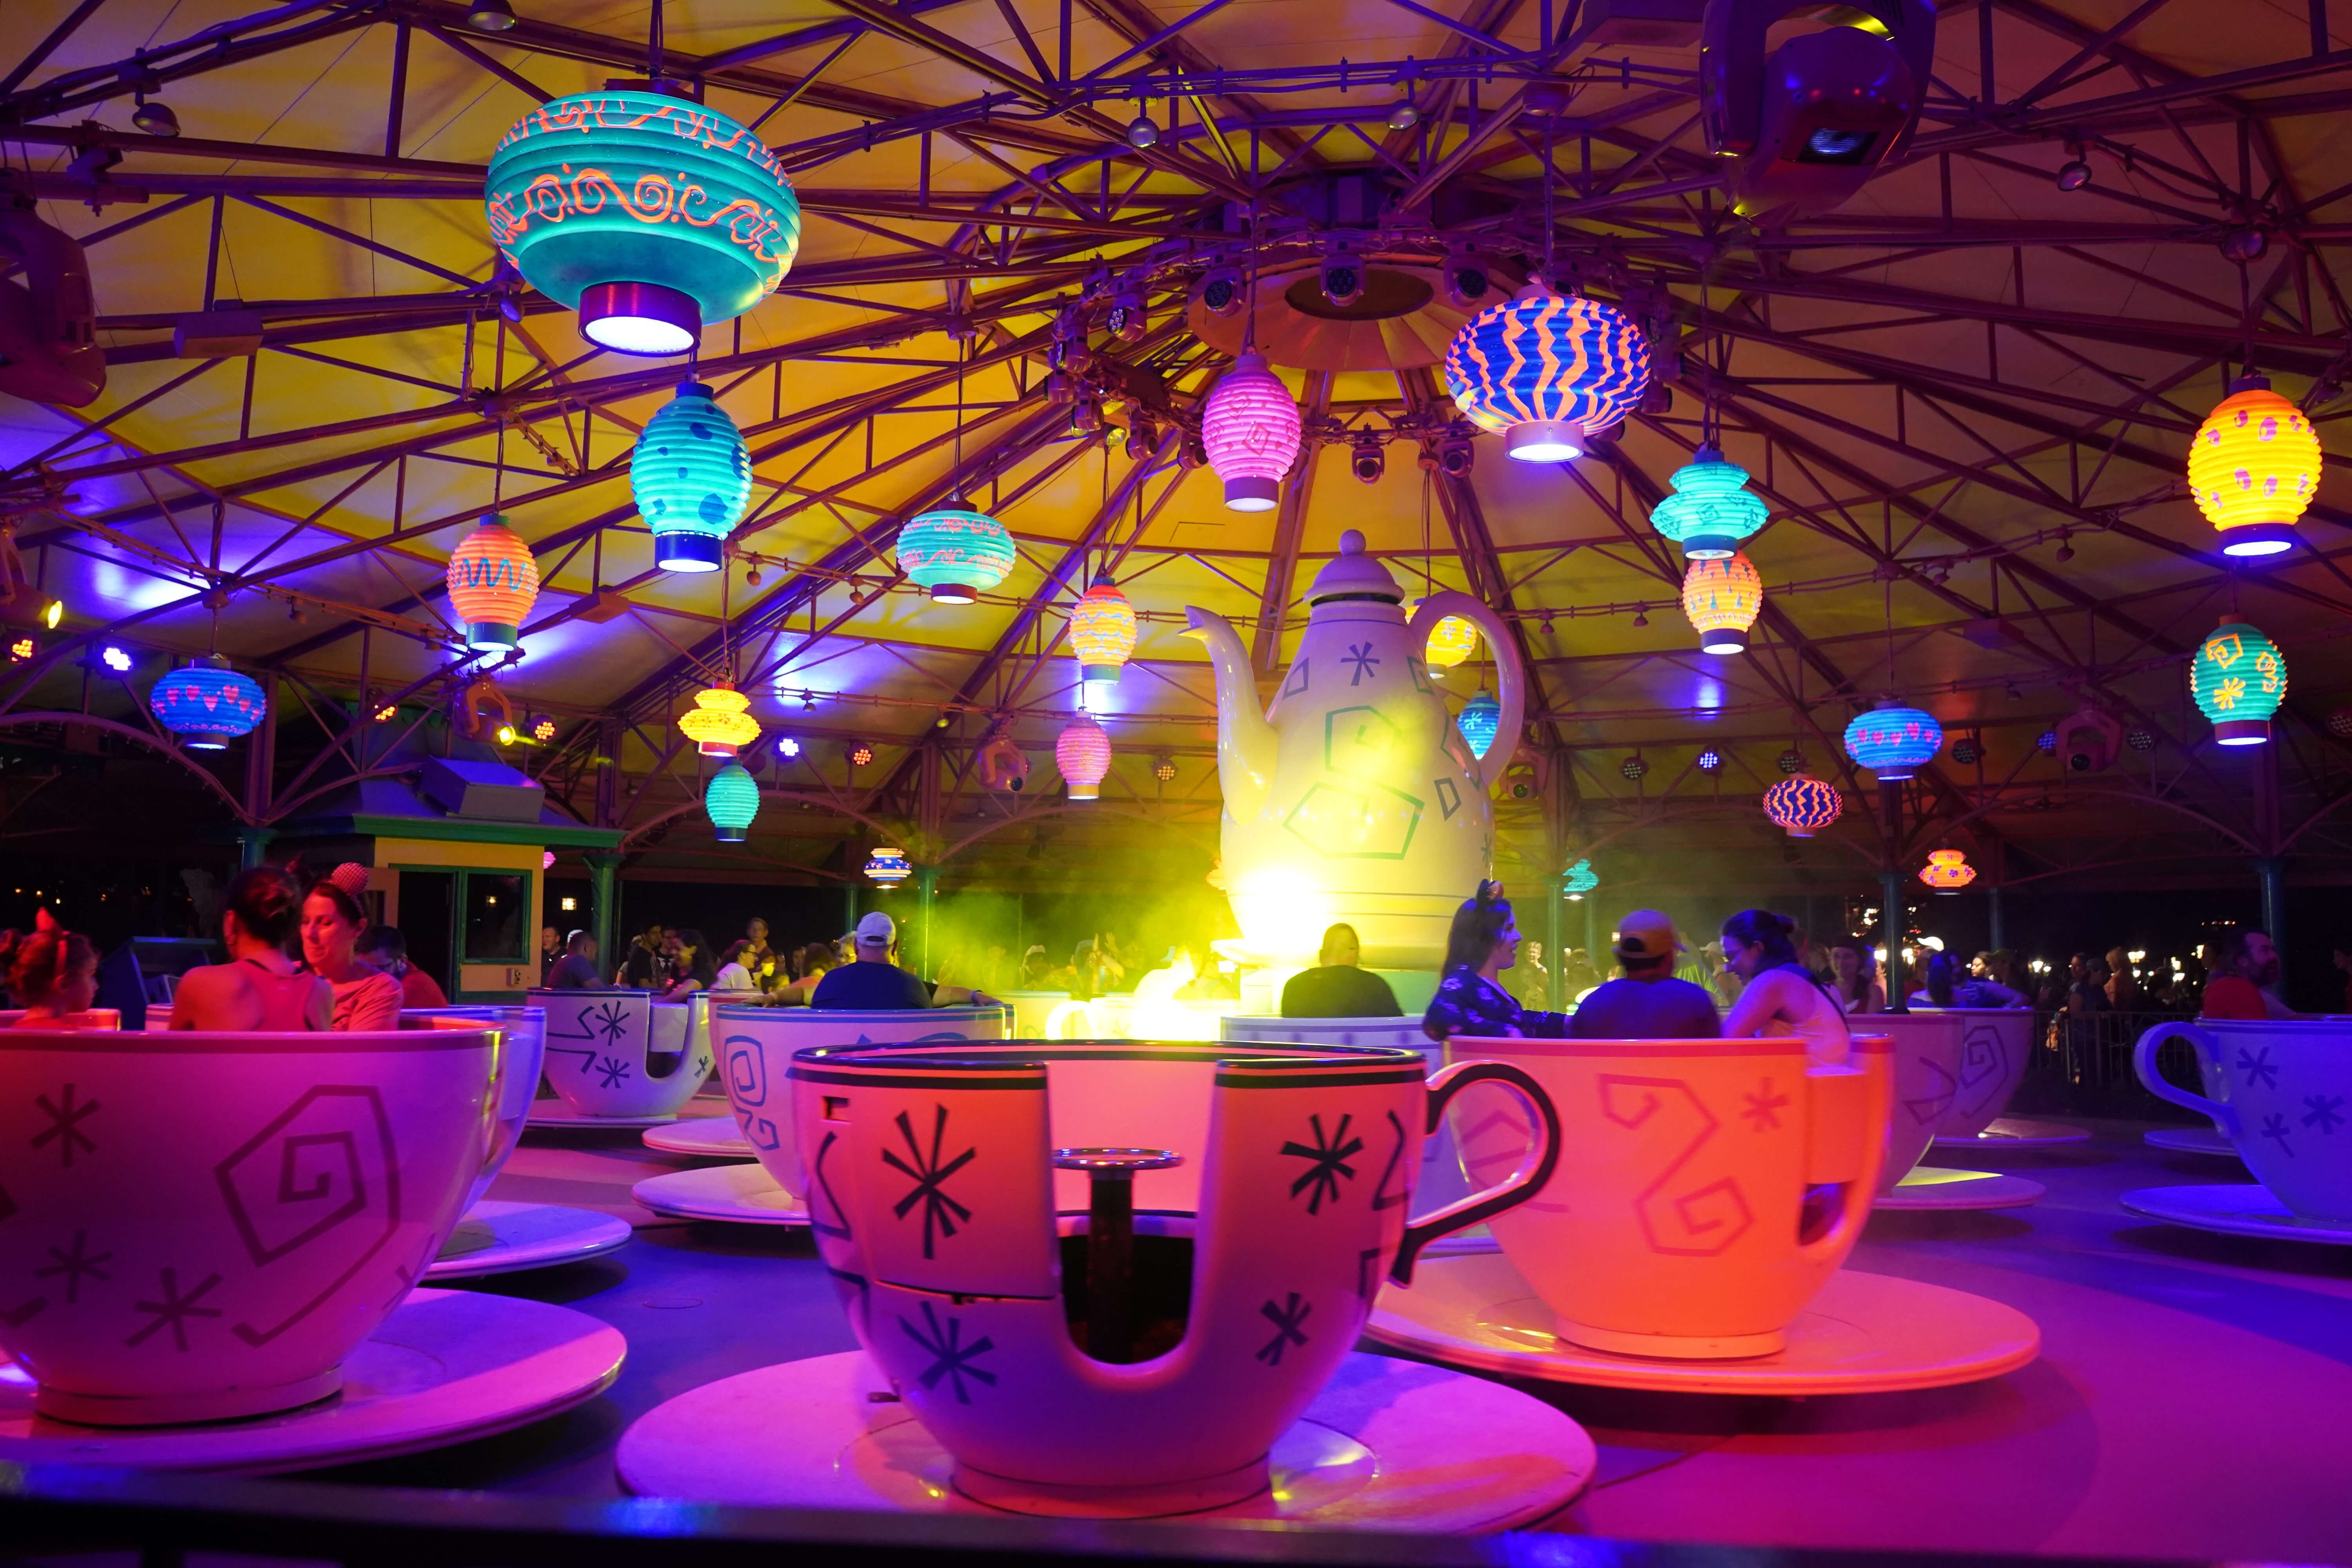 Mad Tea Party Teacups at Halloween in Magic Kingdom